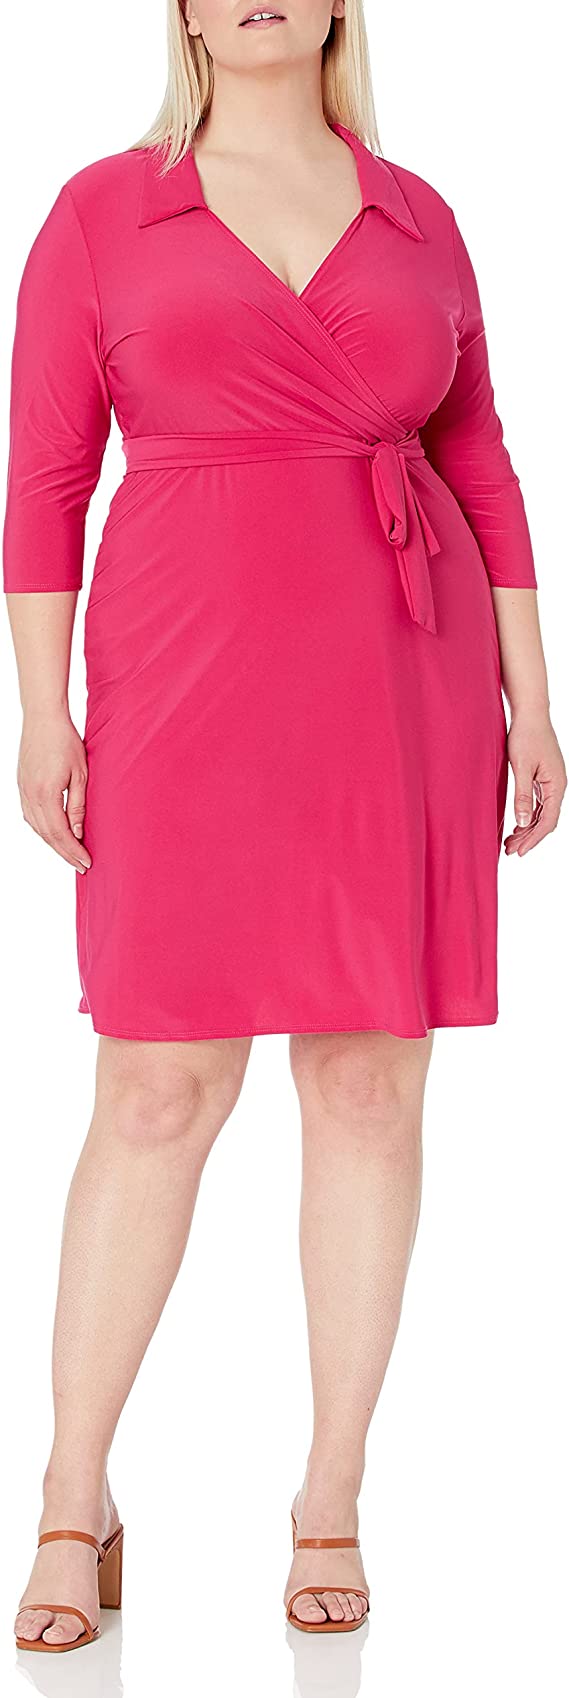 Women's Plus-Size Faux-Wrap Dress with Collar - WF Shopping